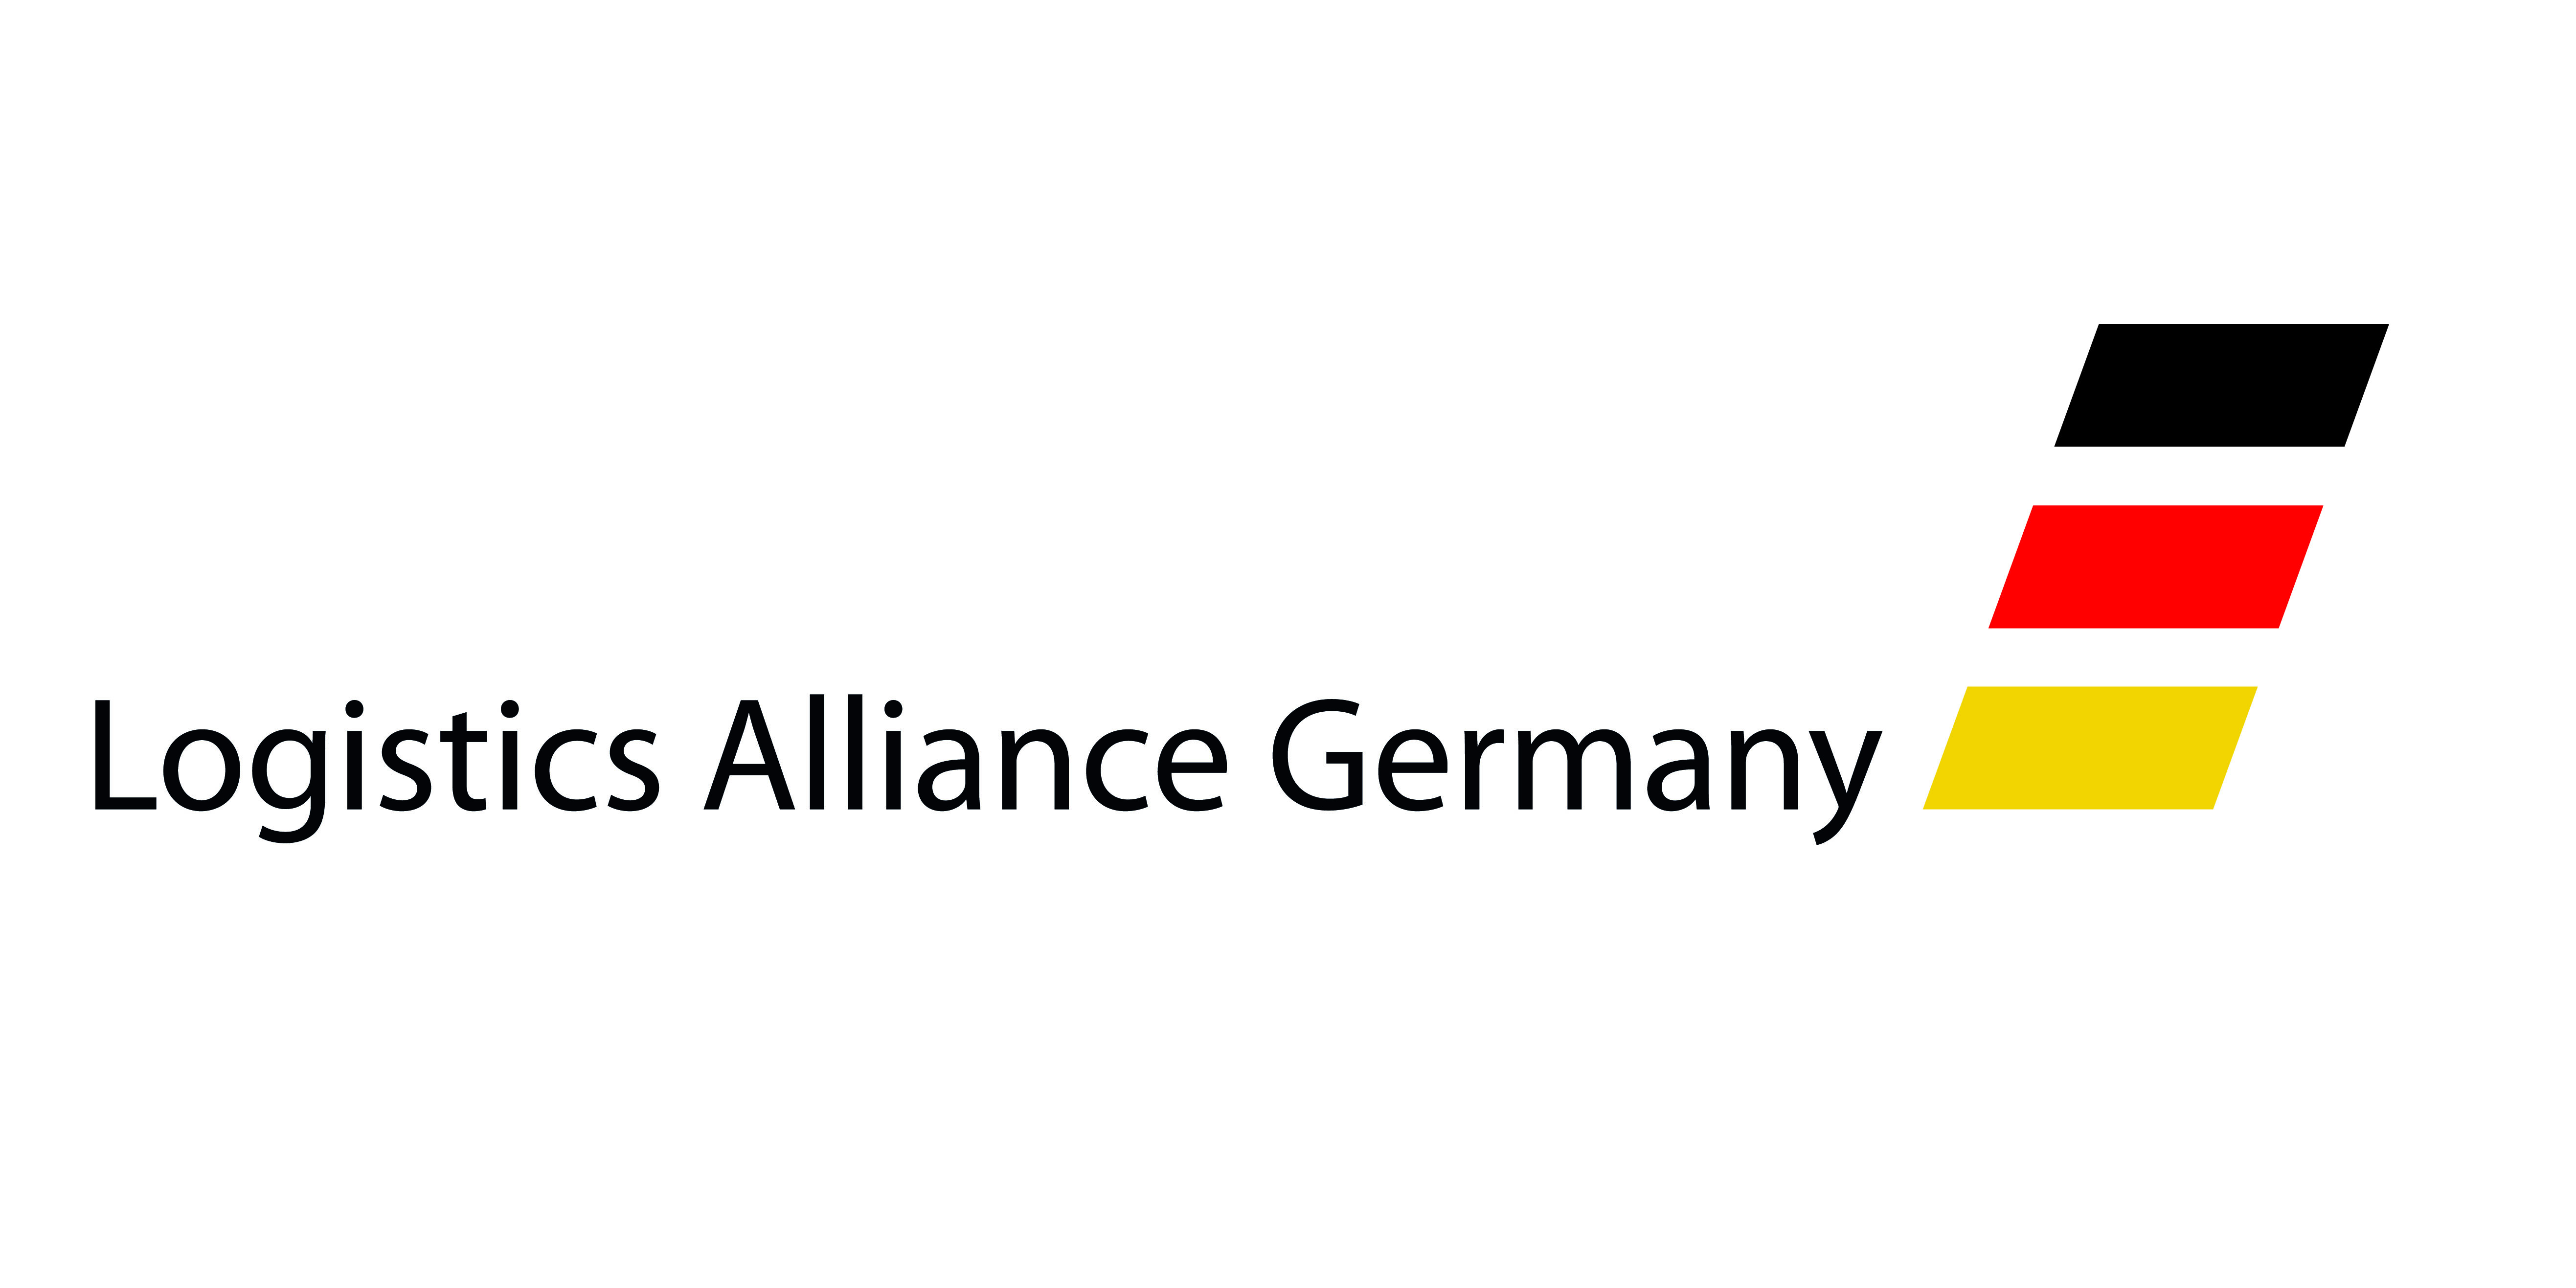 Logistics Hall of Fame und Logistics Alliance Germany vereinbaren Partnerschaft